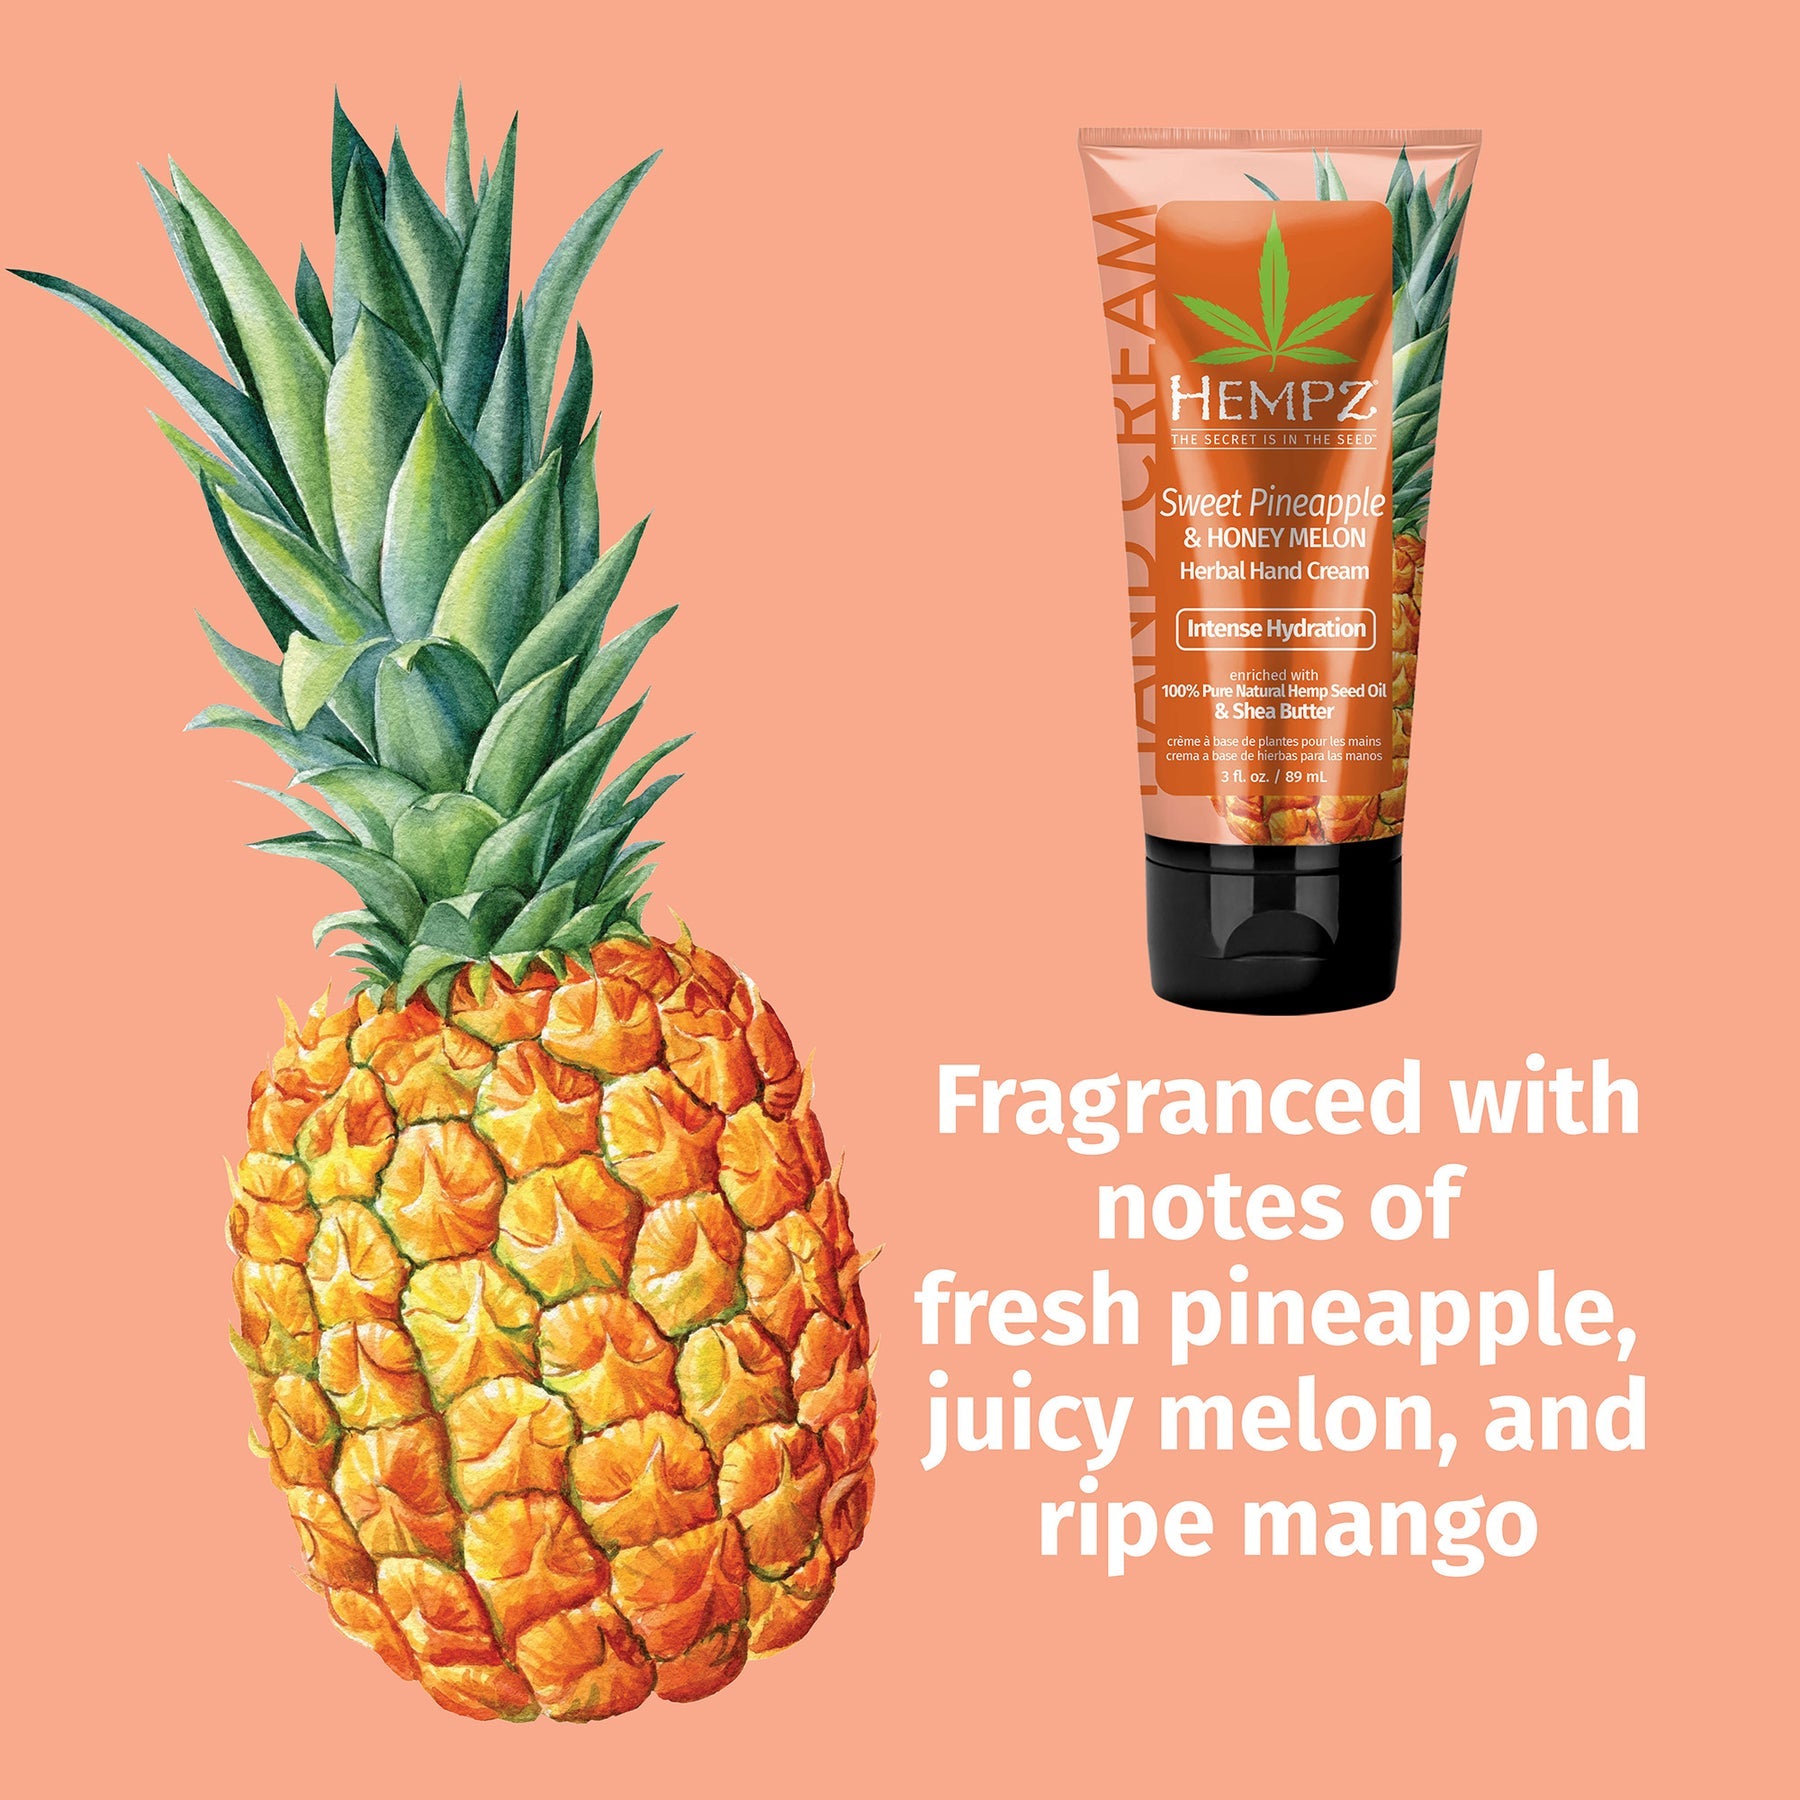 Hempz - Sweet Pineapple & Honey Melon Herbal Hand Cream - Creata Beauty - Professional Beauty Products